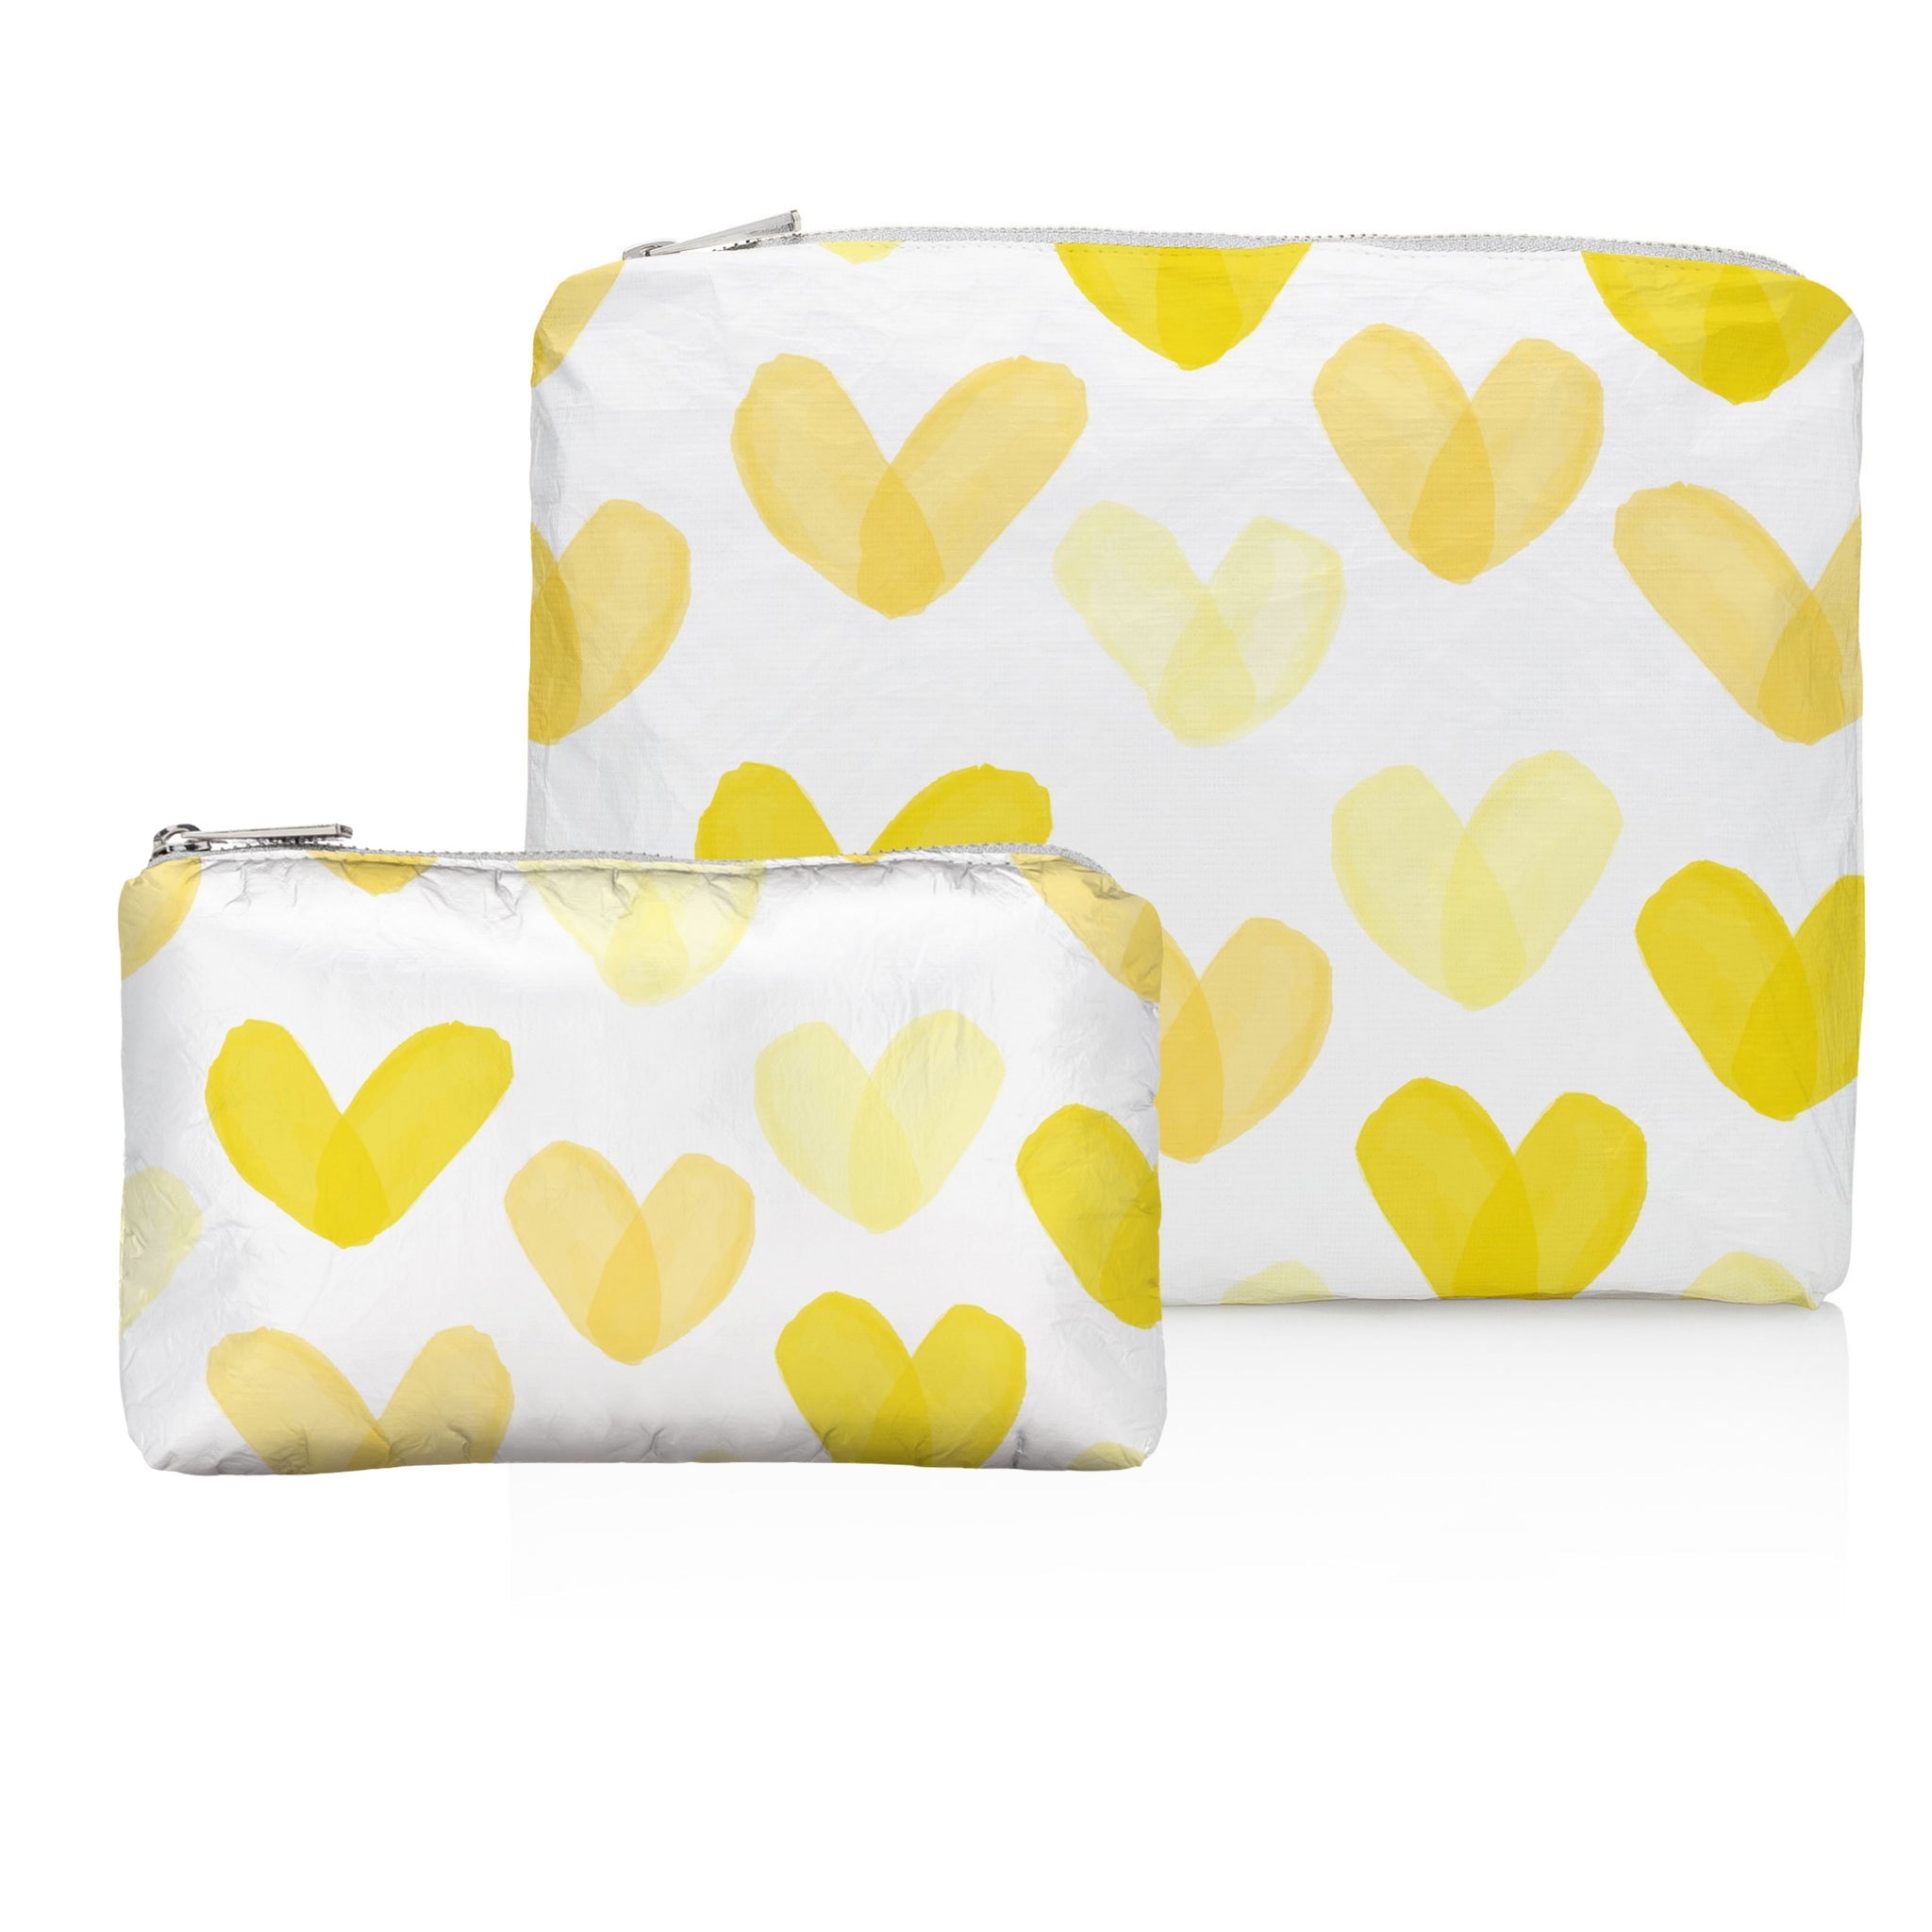 Set of Two - Organizational Packs - "Language of Love" Sunshine Yellow Heart Print